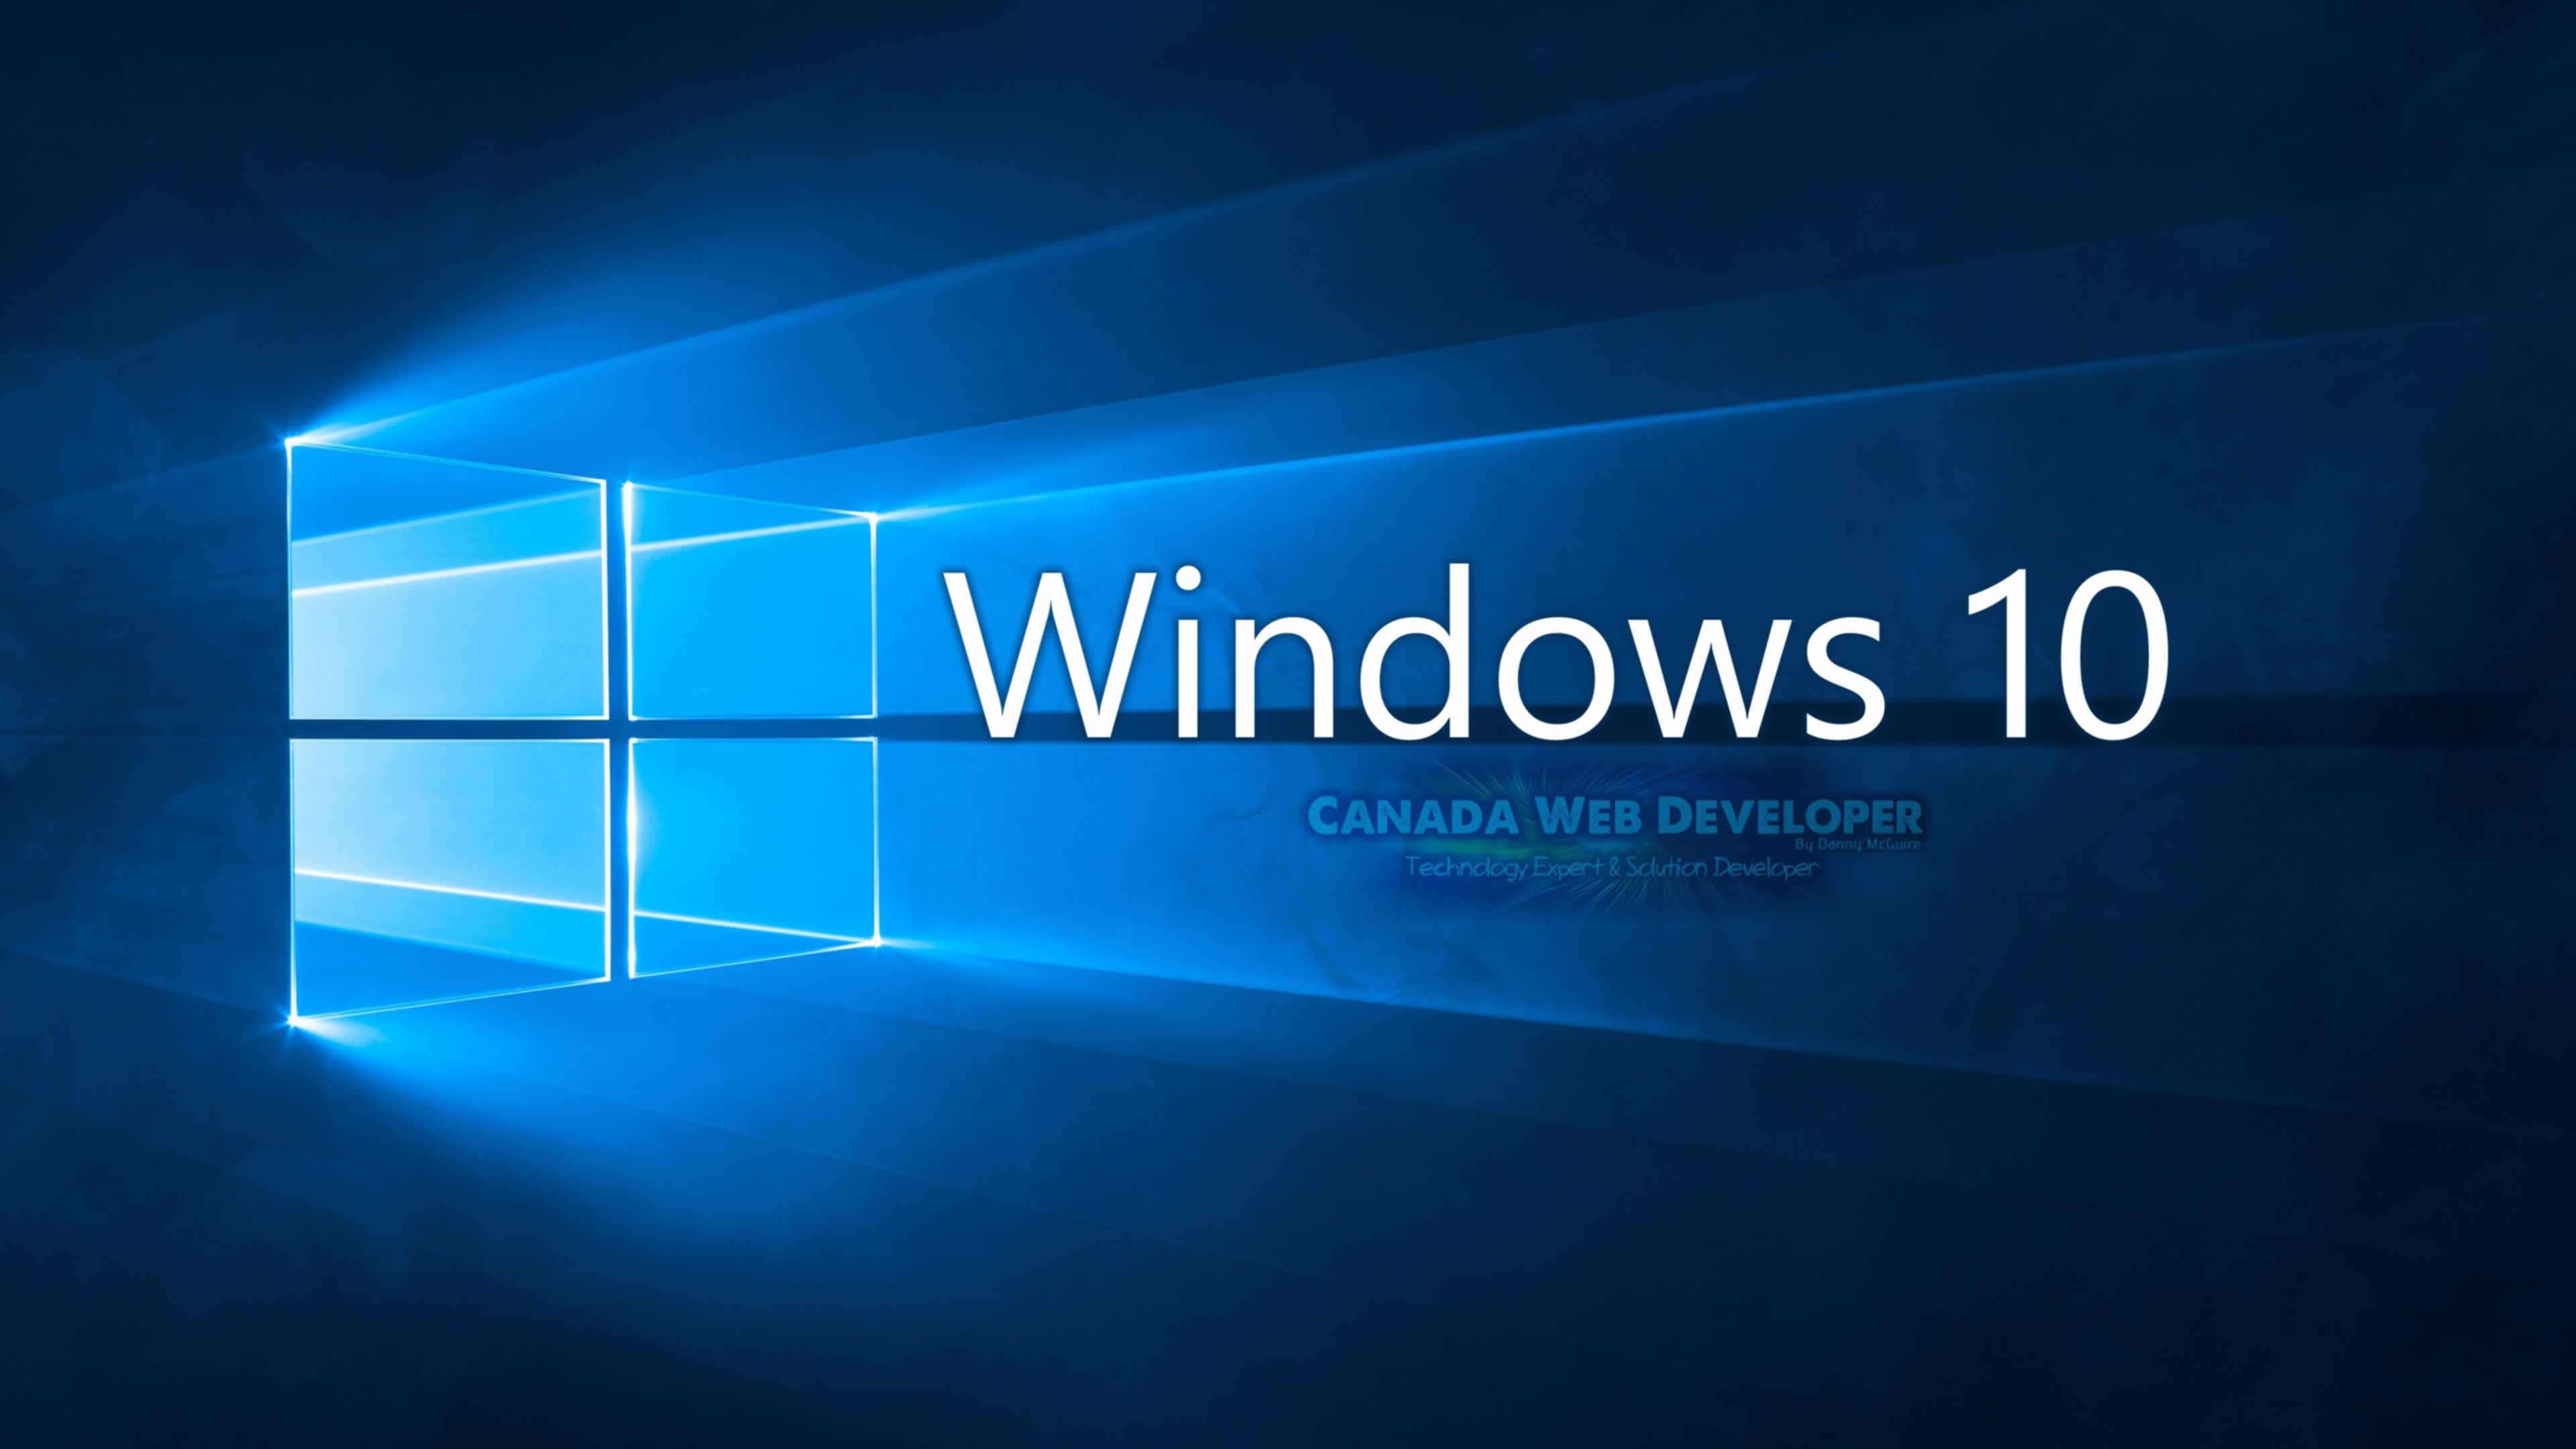 Microsoft Windows 10 Logo Wallpaper - WallpaperSafari